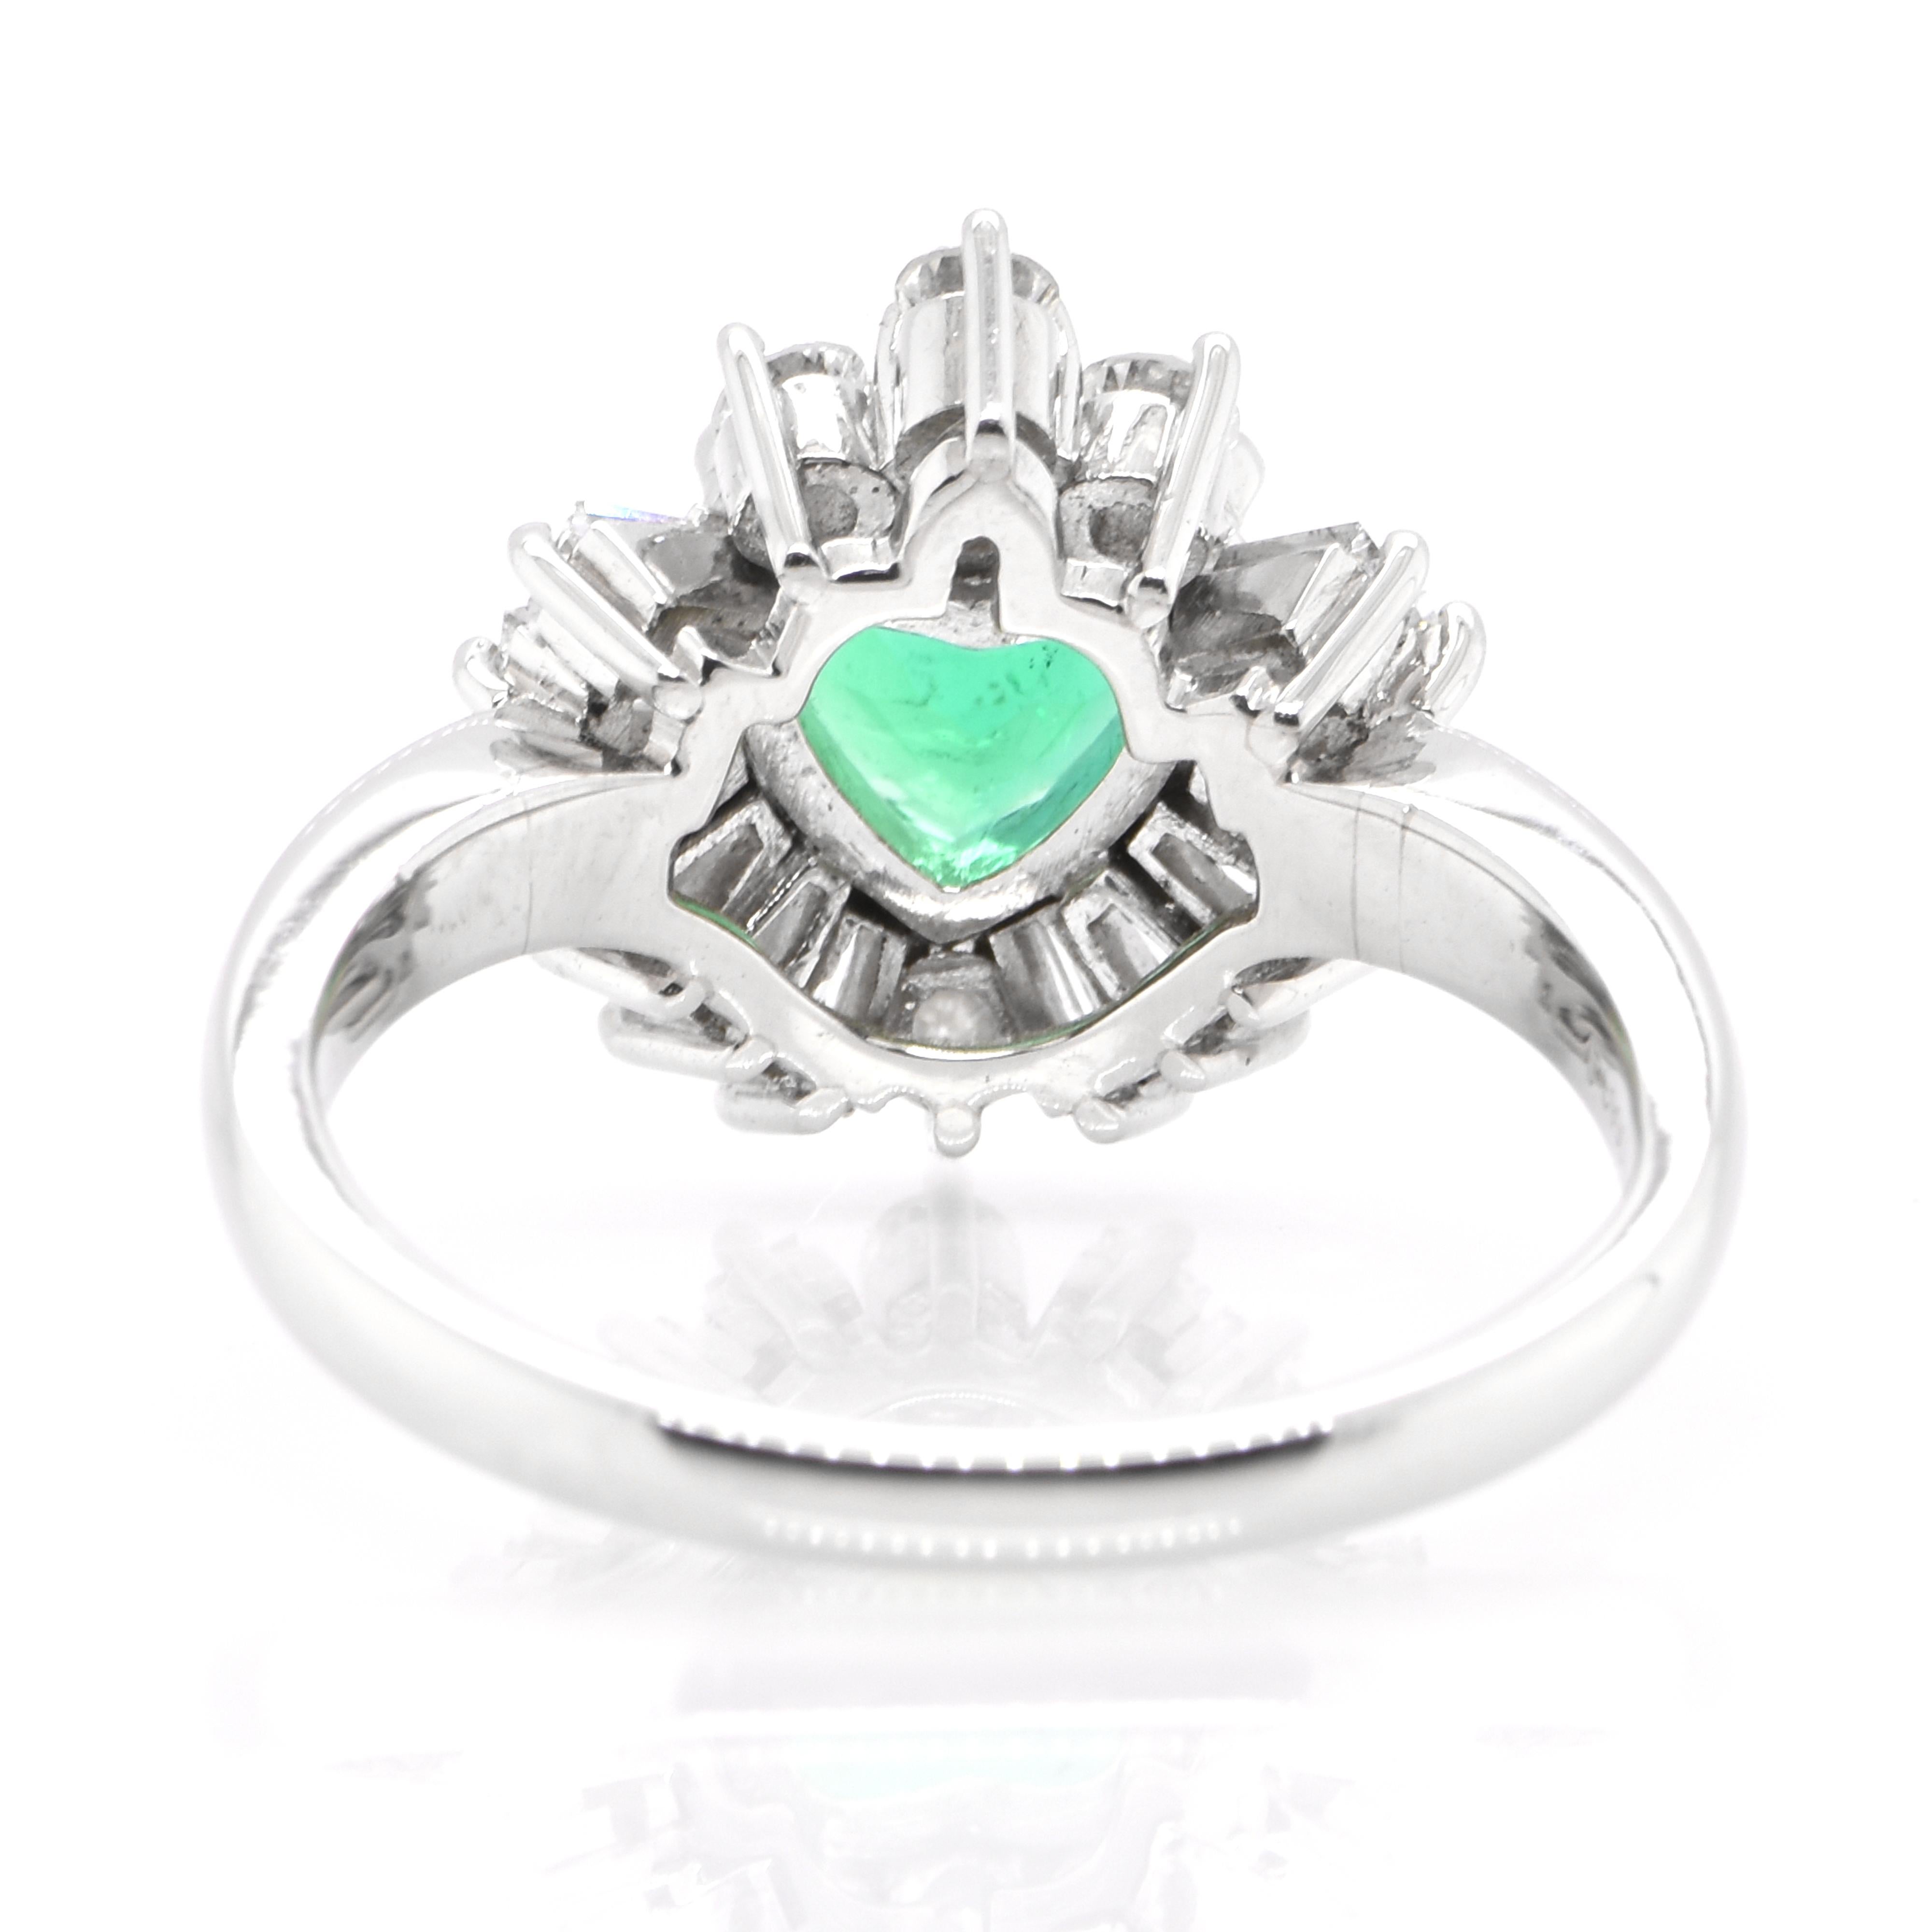 Women's 1.03 Carat Natural Heart Shape Emerald and Diamond Ring Set in Platinum